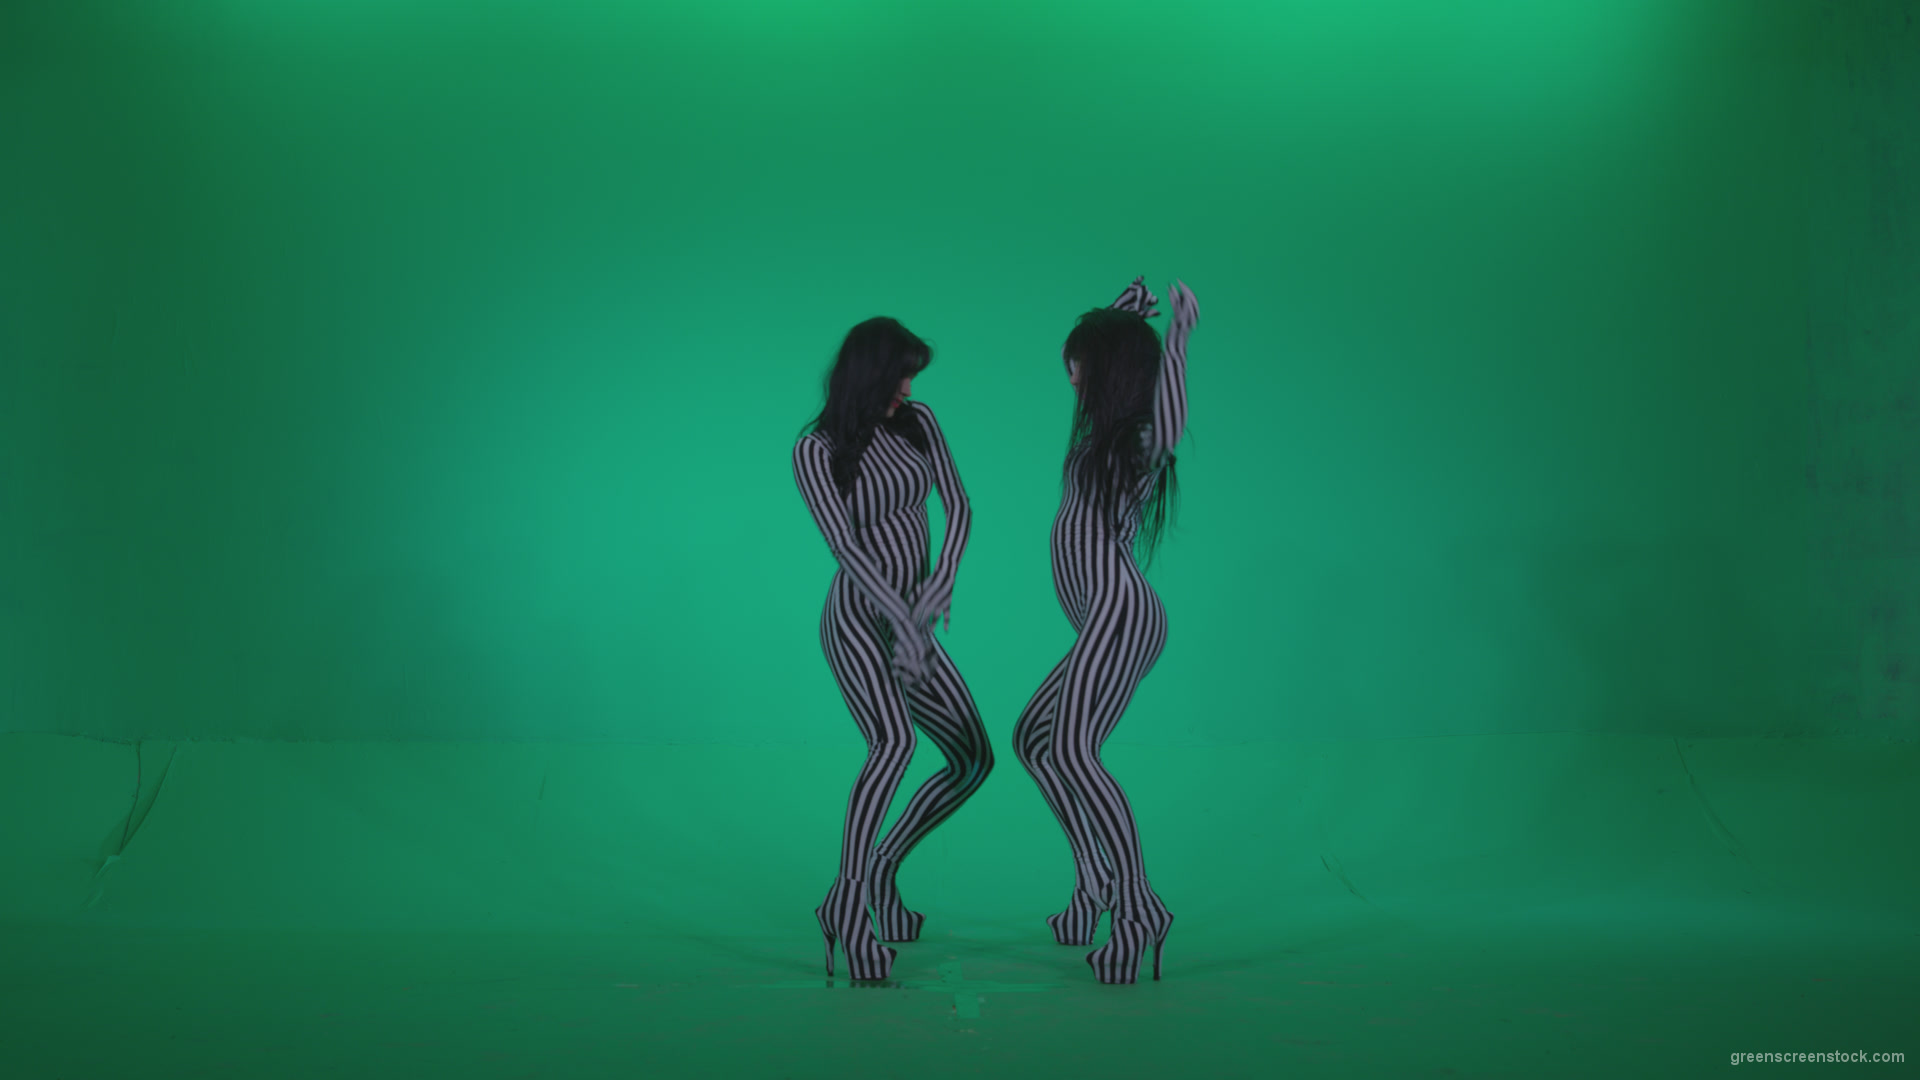 Go-go-Dancer-White-Stripes-s5-Green-Screen-Video-Footage_002 Green Screen Stock